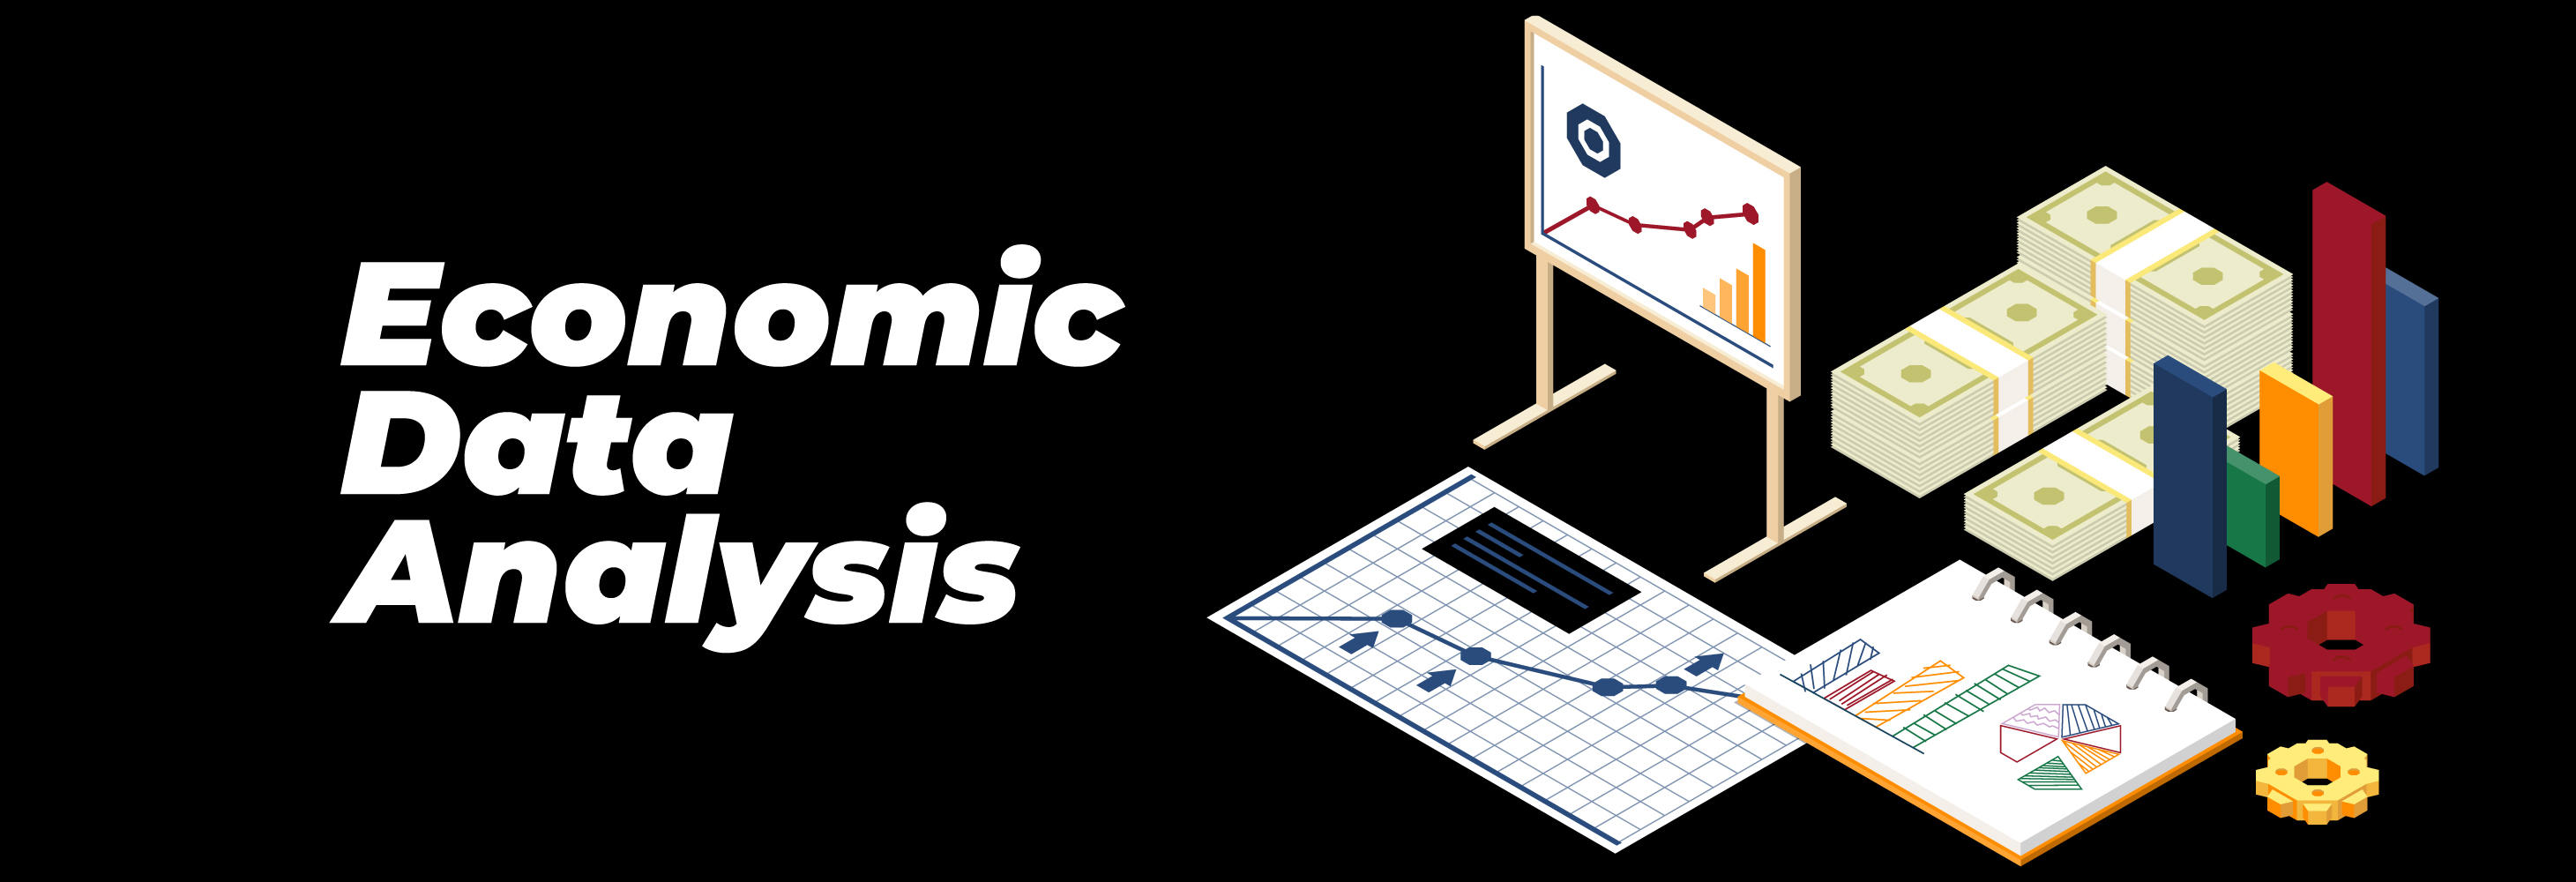 Economic Data Analysis